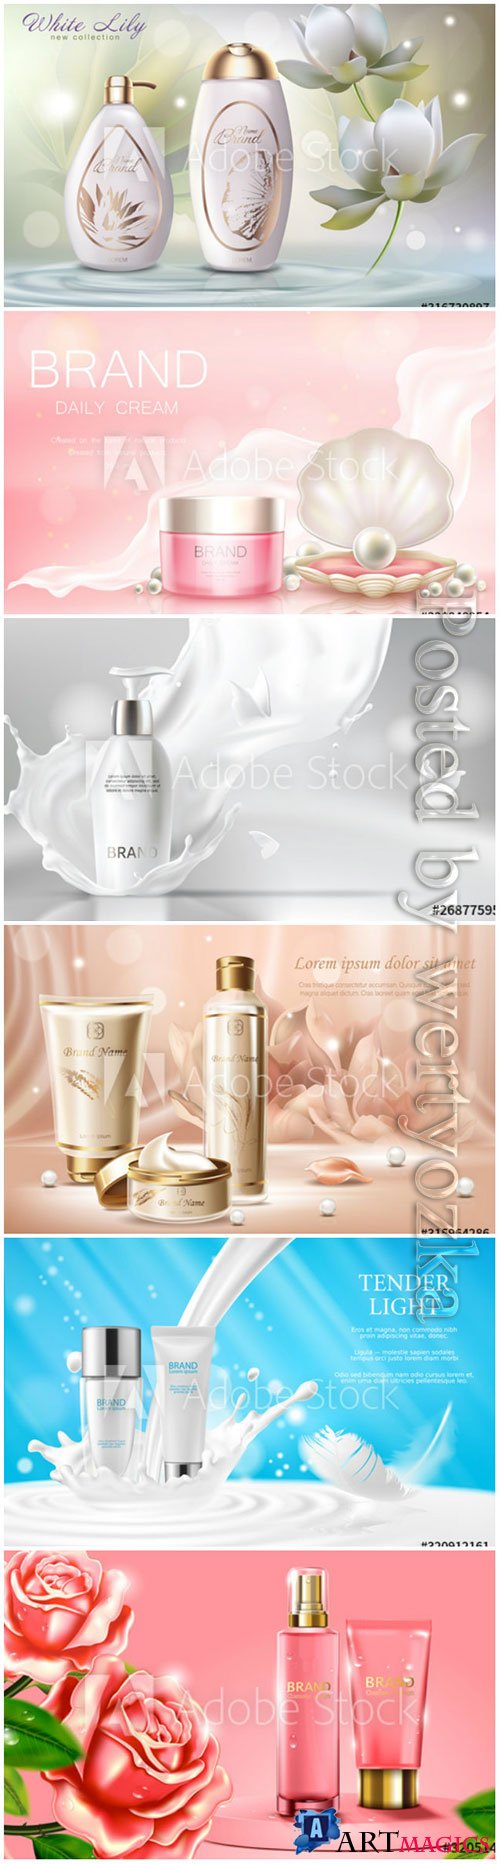 Cosmetics advertising banner vector template